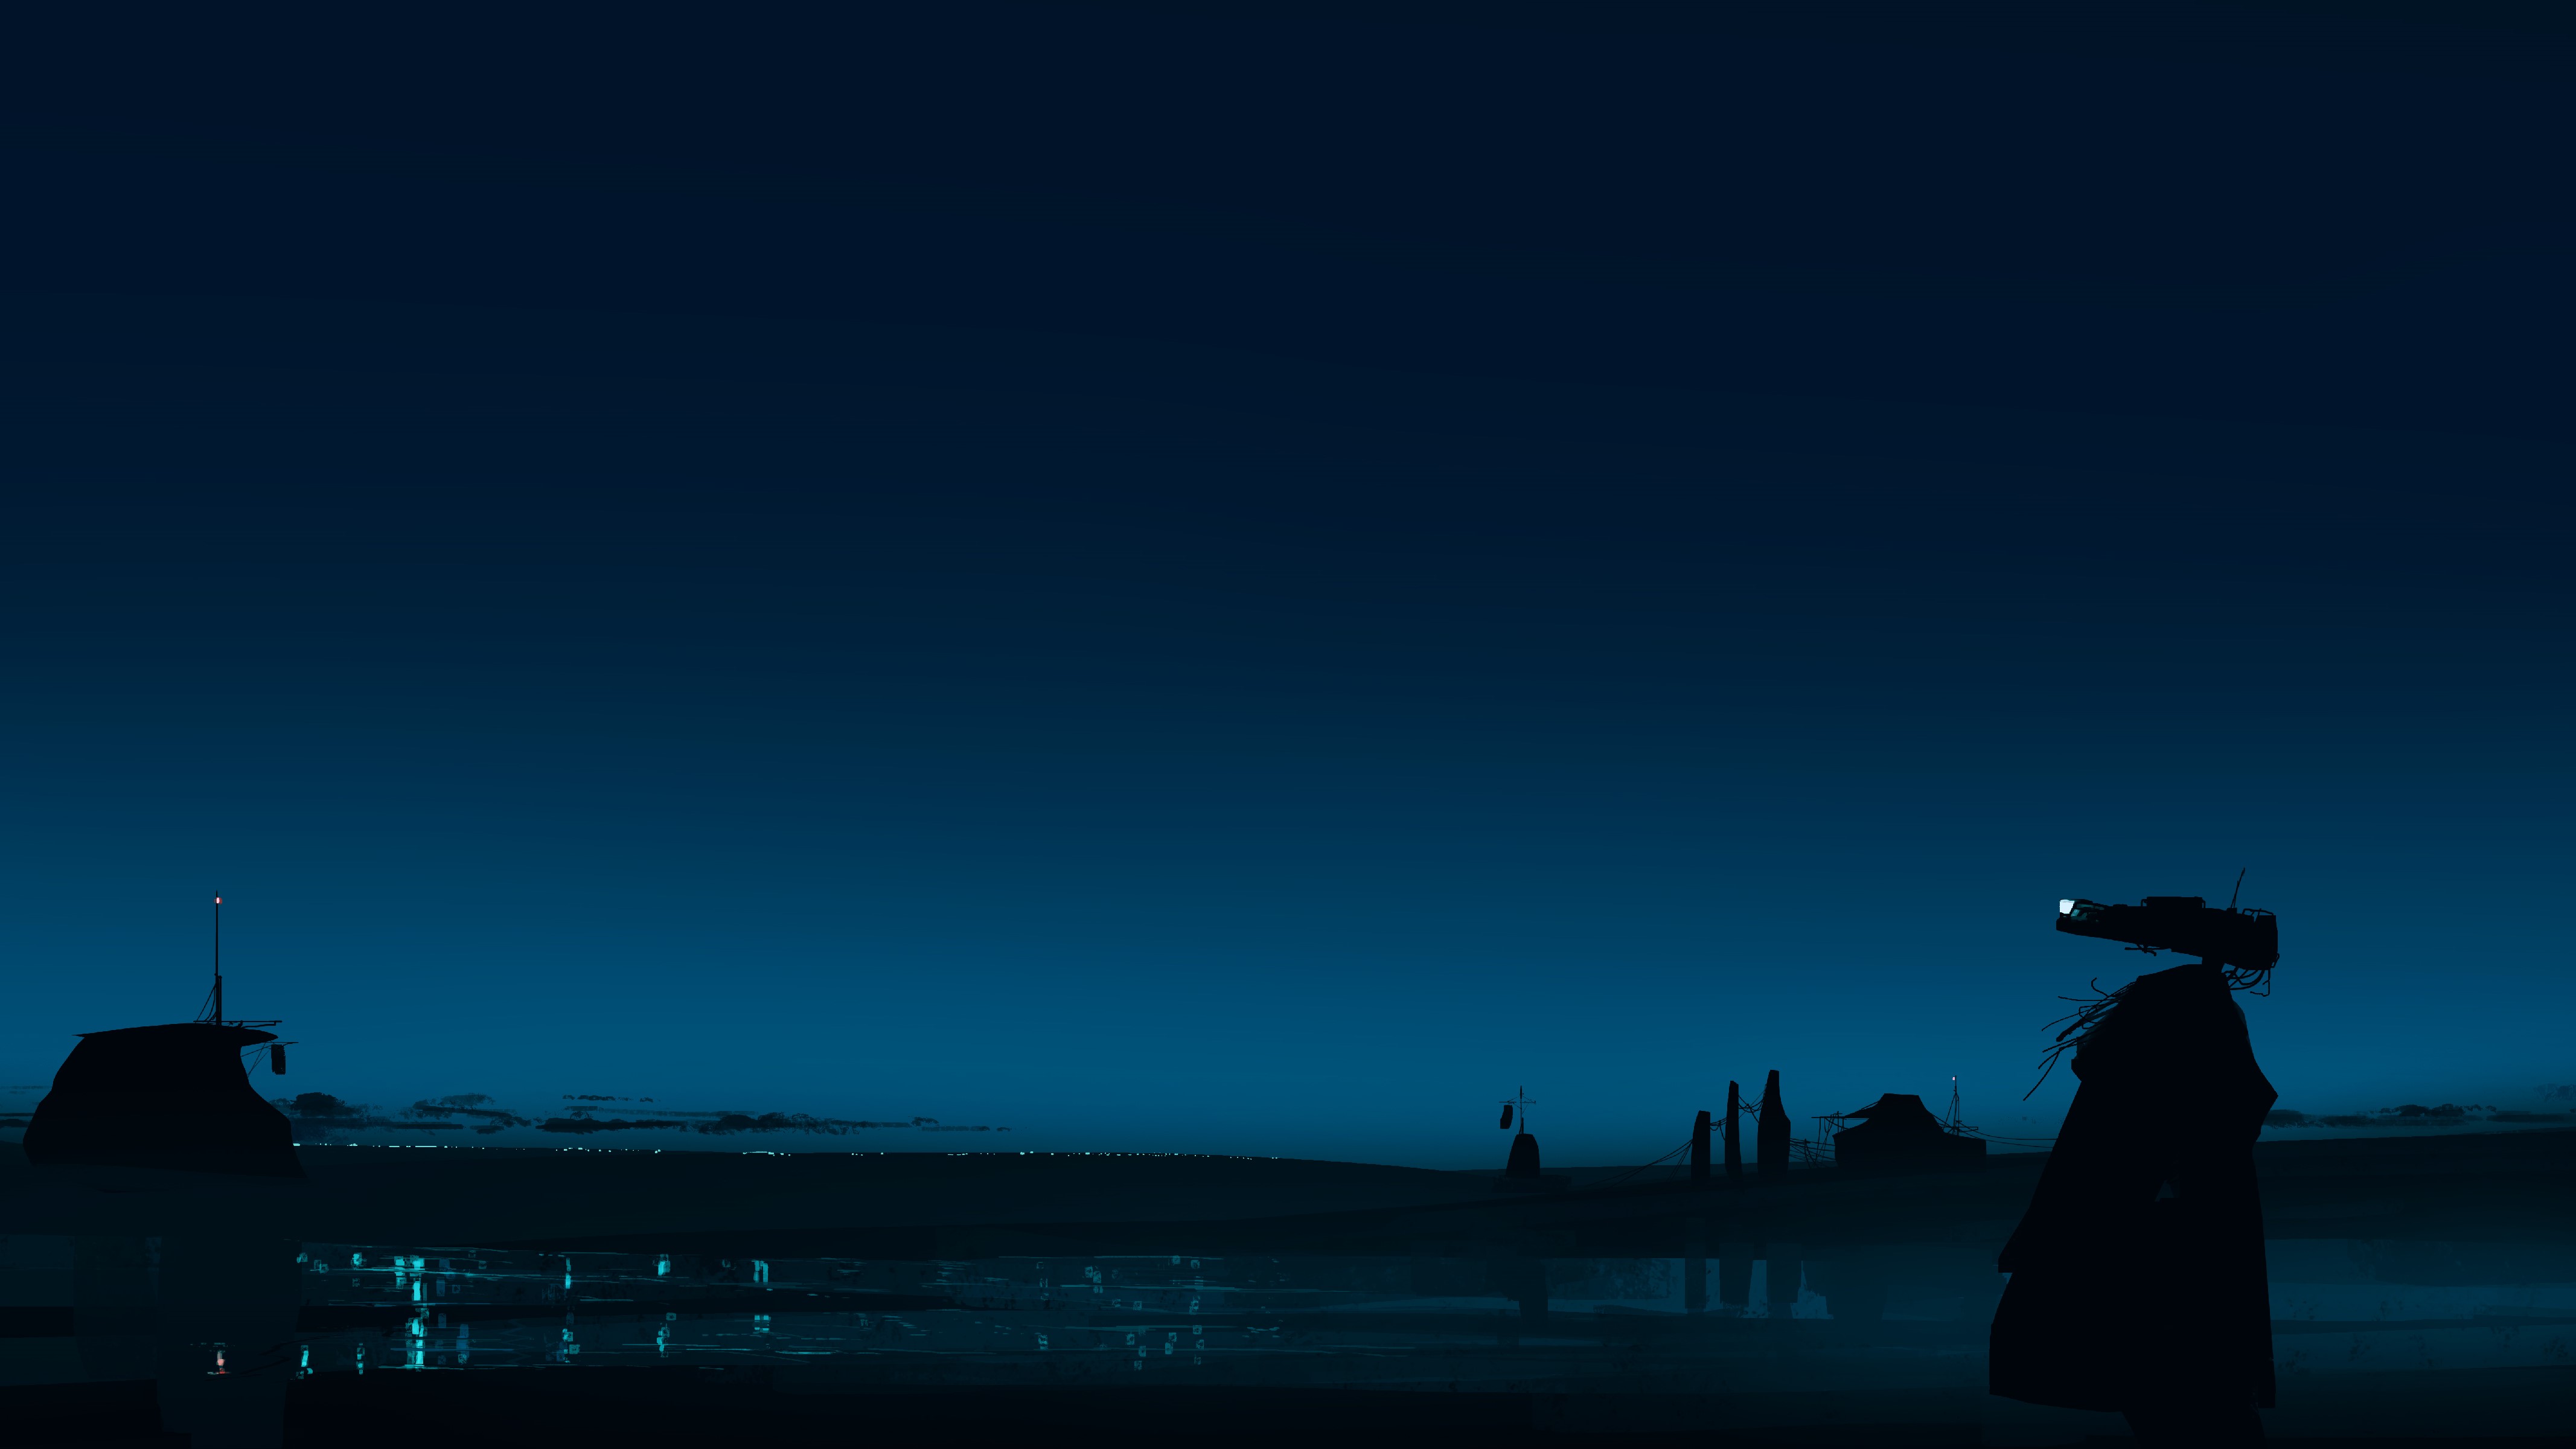 Gracile Pixiv Digital Art Artwork Night Sky Water Reflection Silhouette 4267x2400